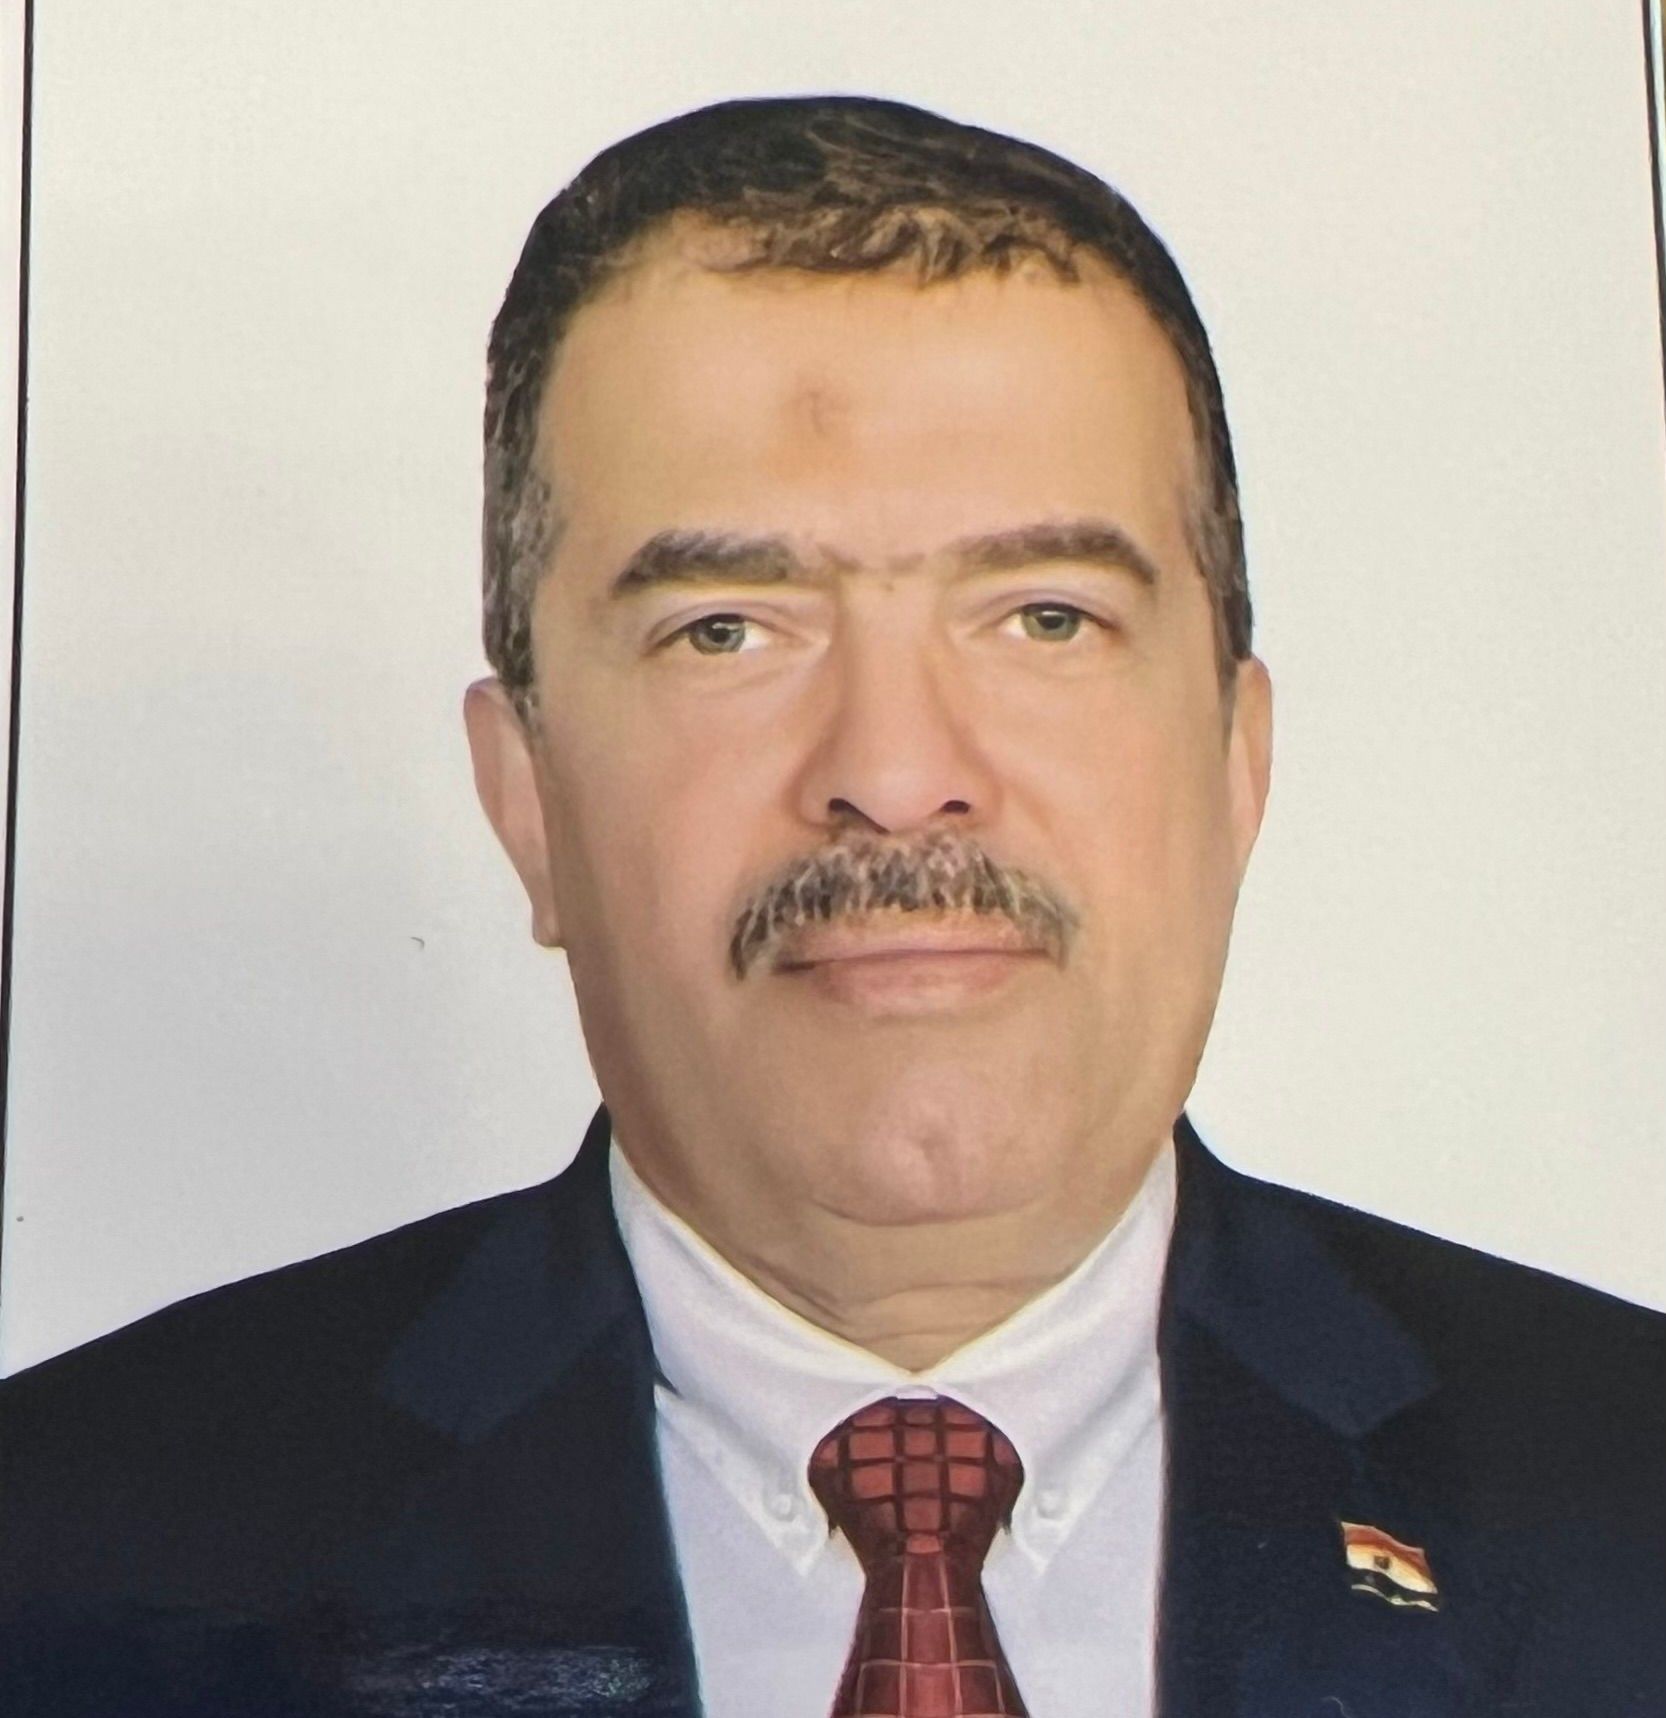 Mohammed Mahmoud Hussein Elsisi